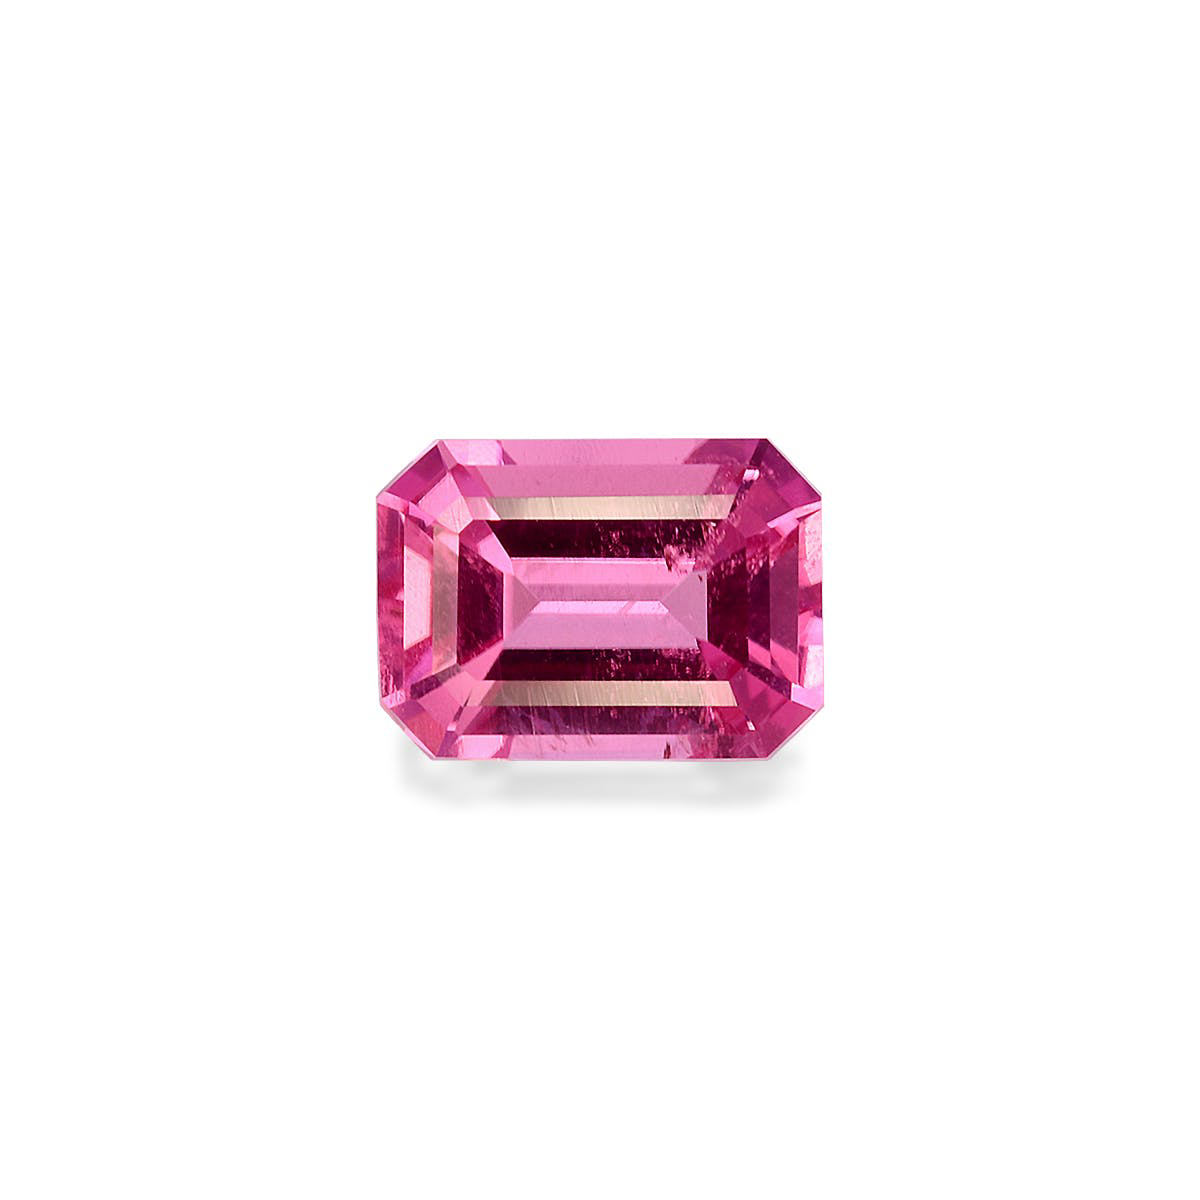 Picture of Fuscia Pink Rubellite Tourmaline 1.11ct - 7x5mm (RL1252)